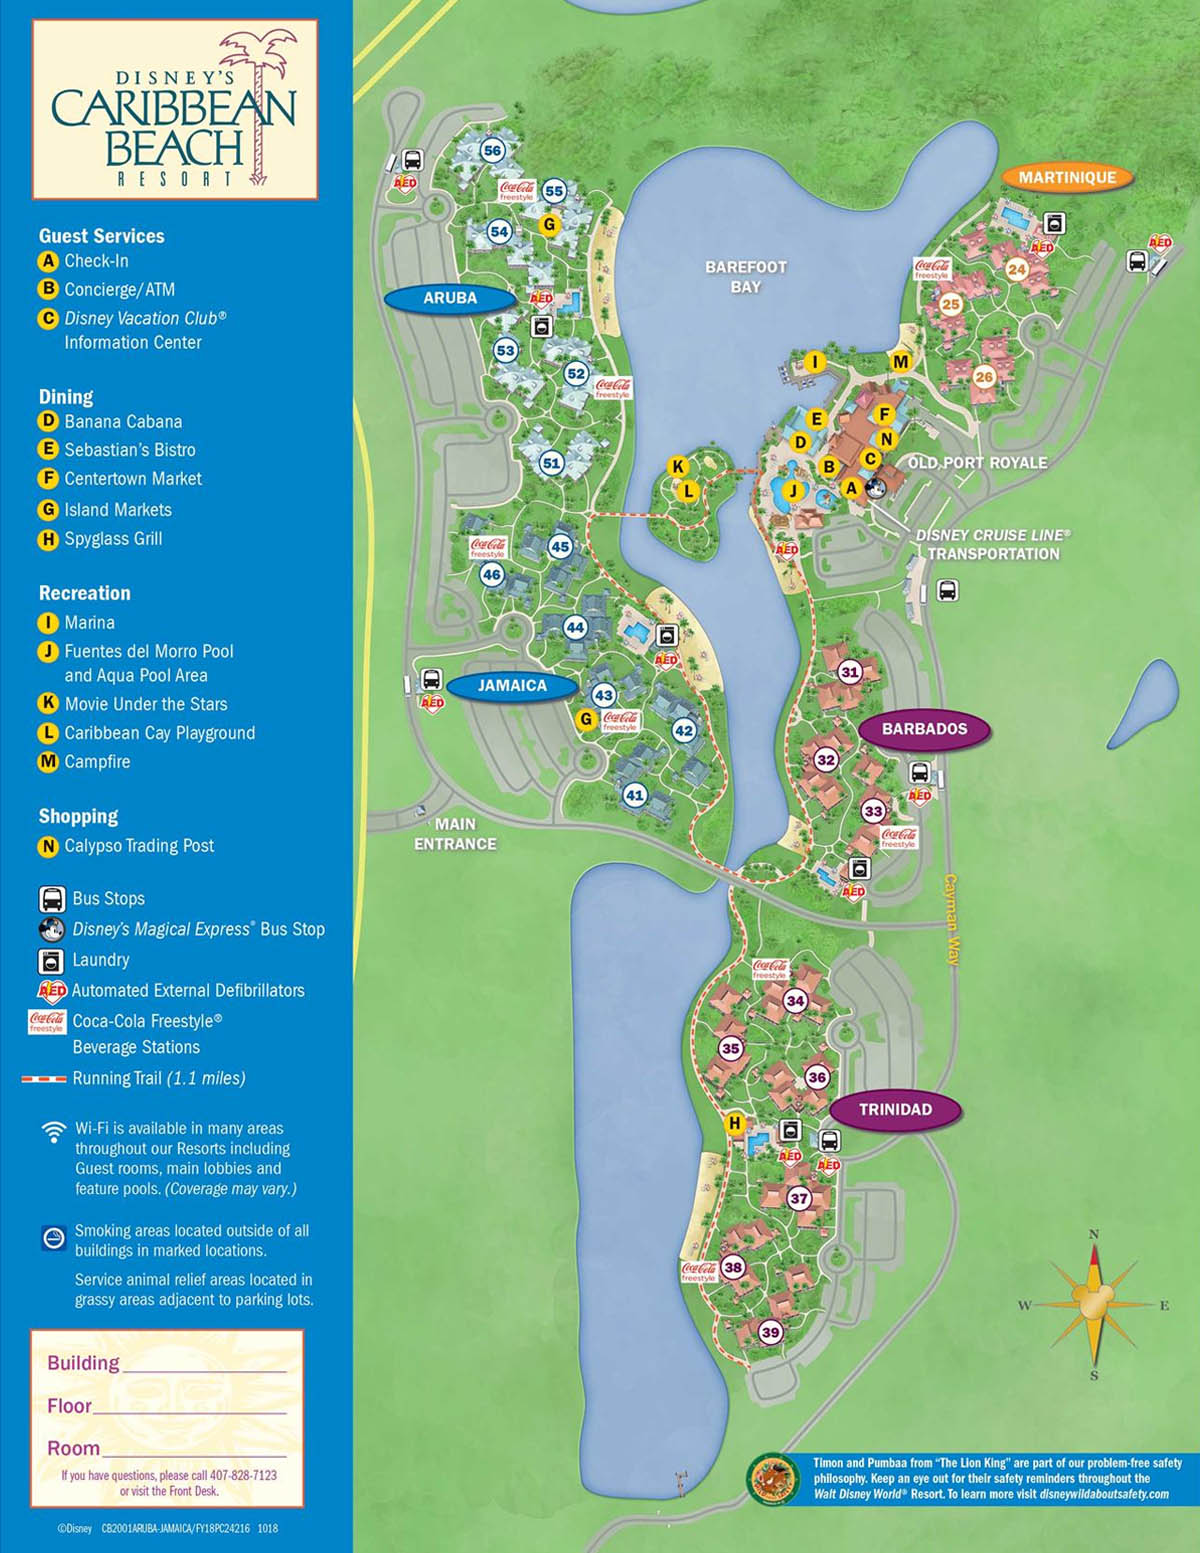 Map of the Disney Caribbean Beach Resort 2018